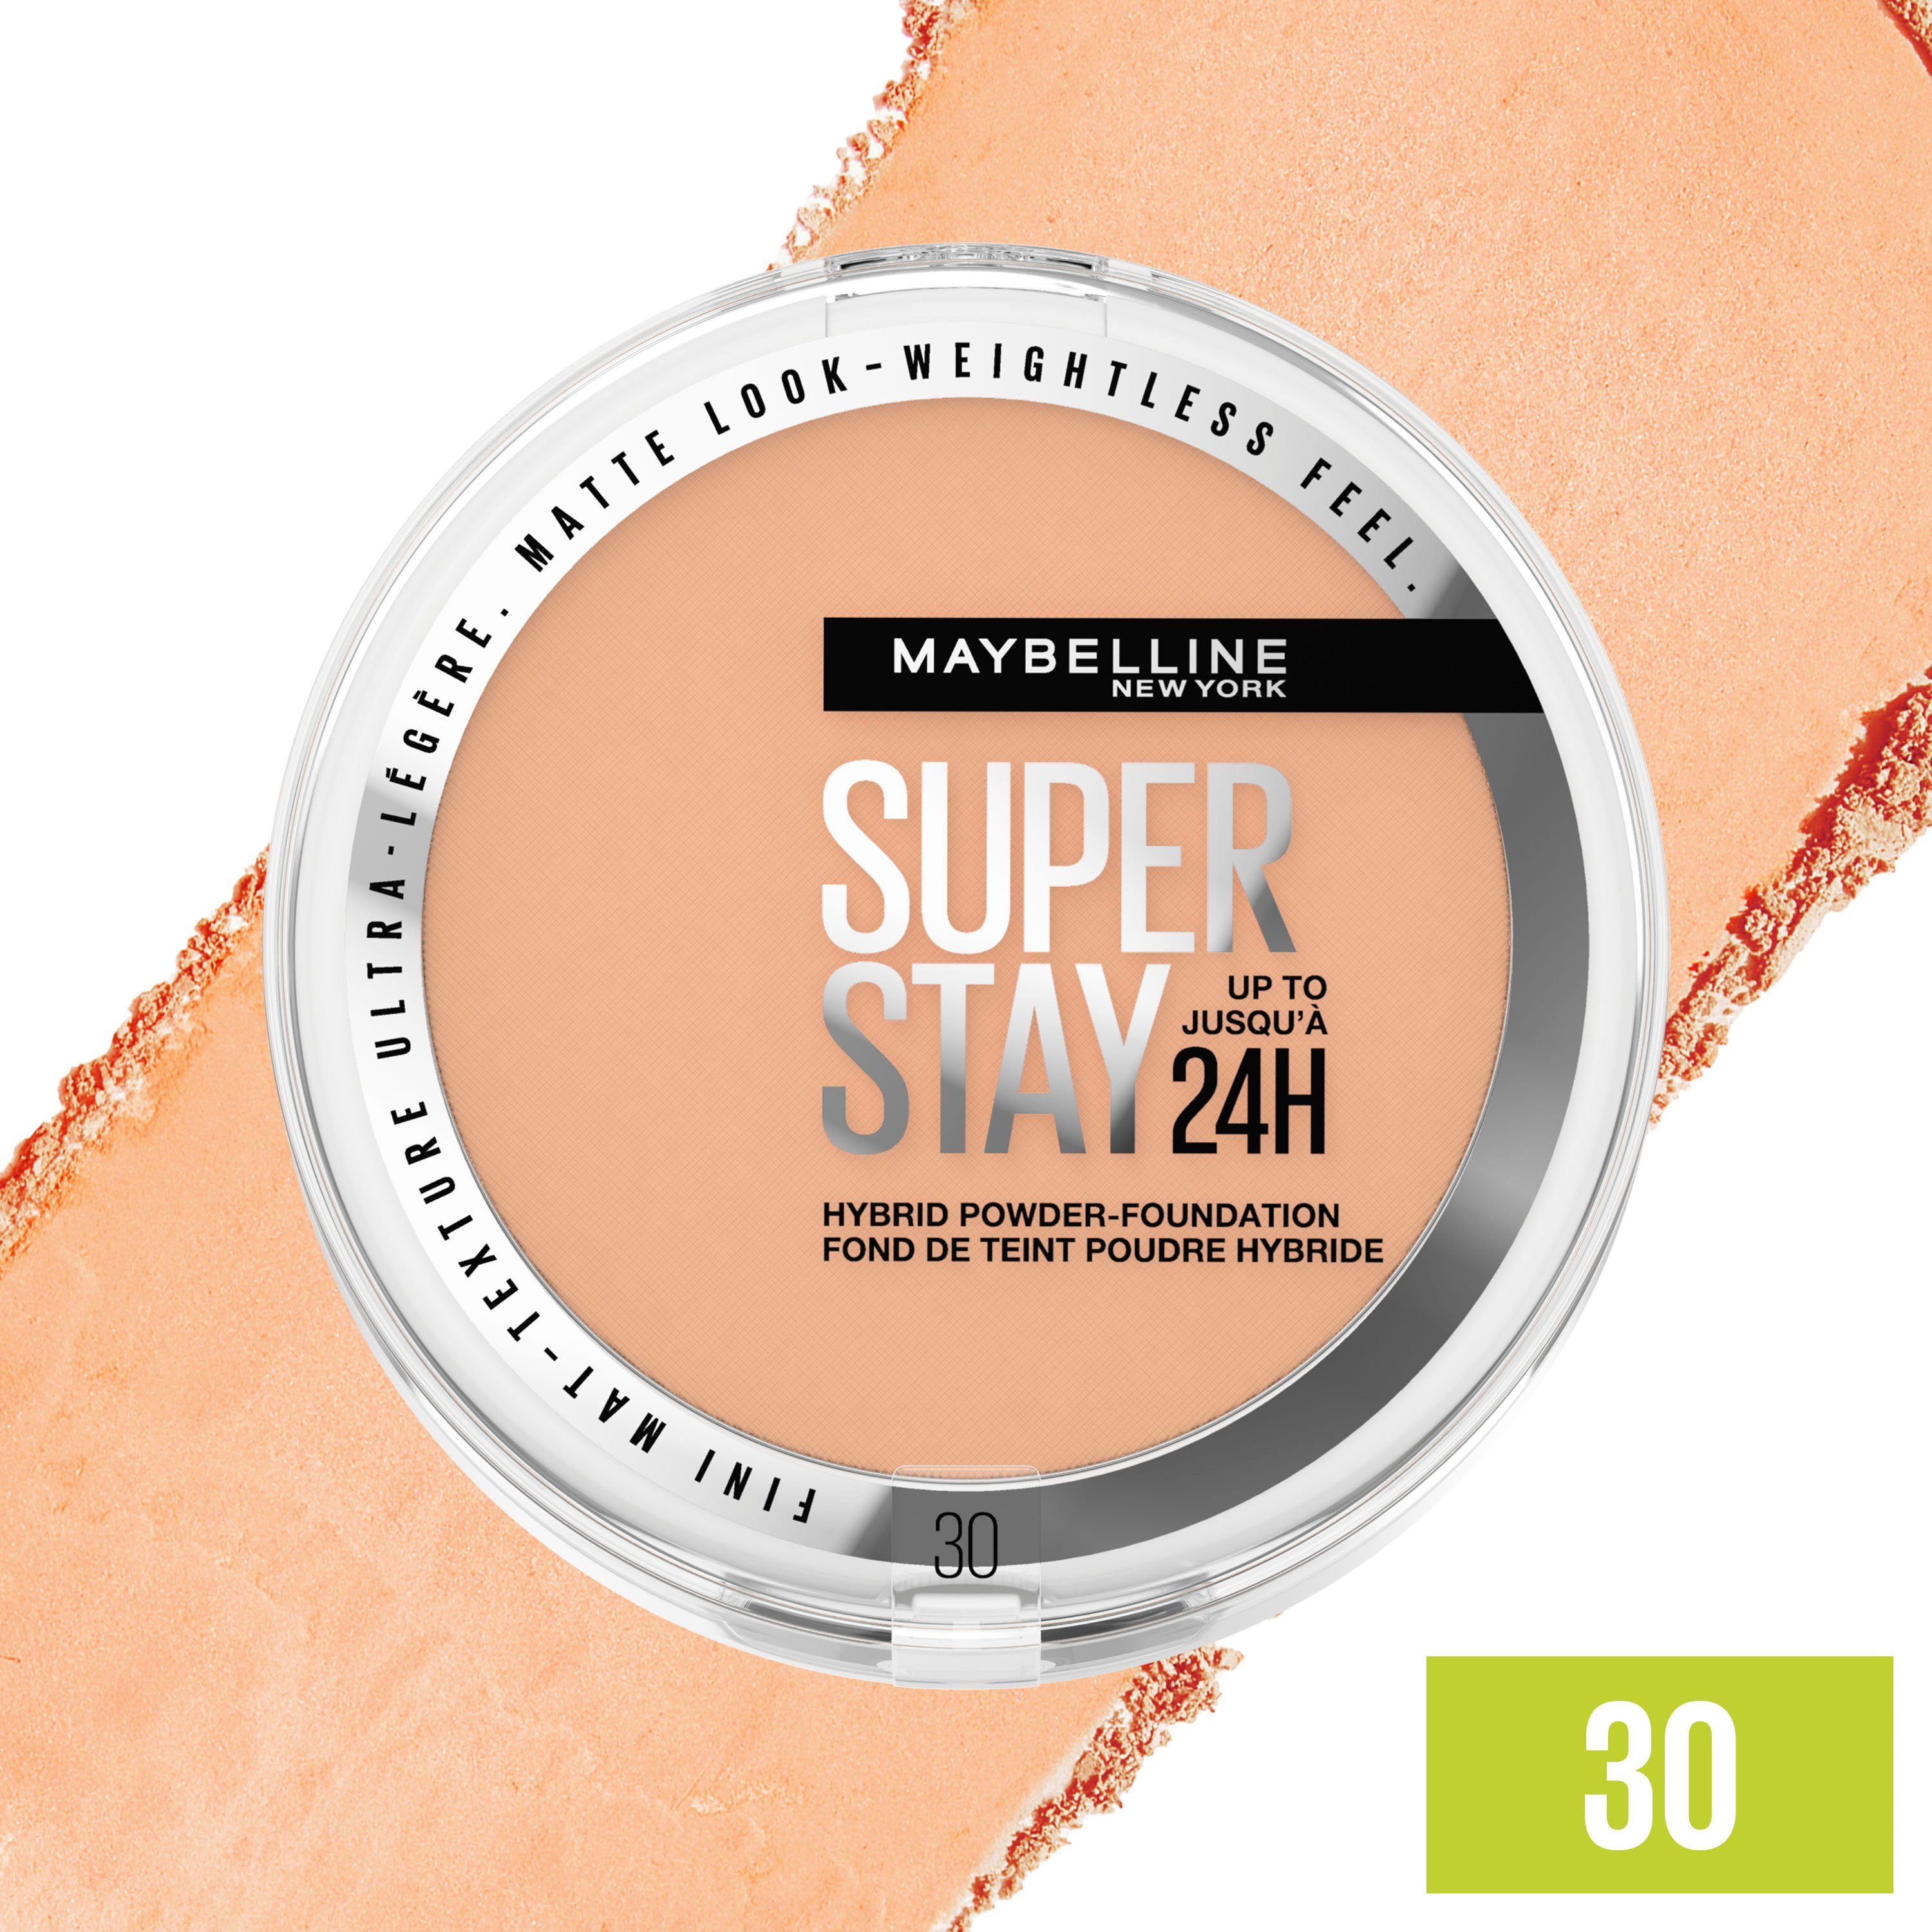 Make-Up New Puder YORK Hybrides Stay York Super Foundation NEW MAYBELLINE Maybelline